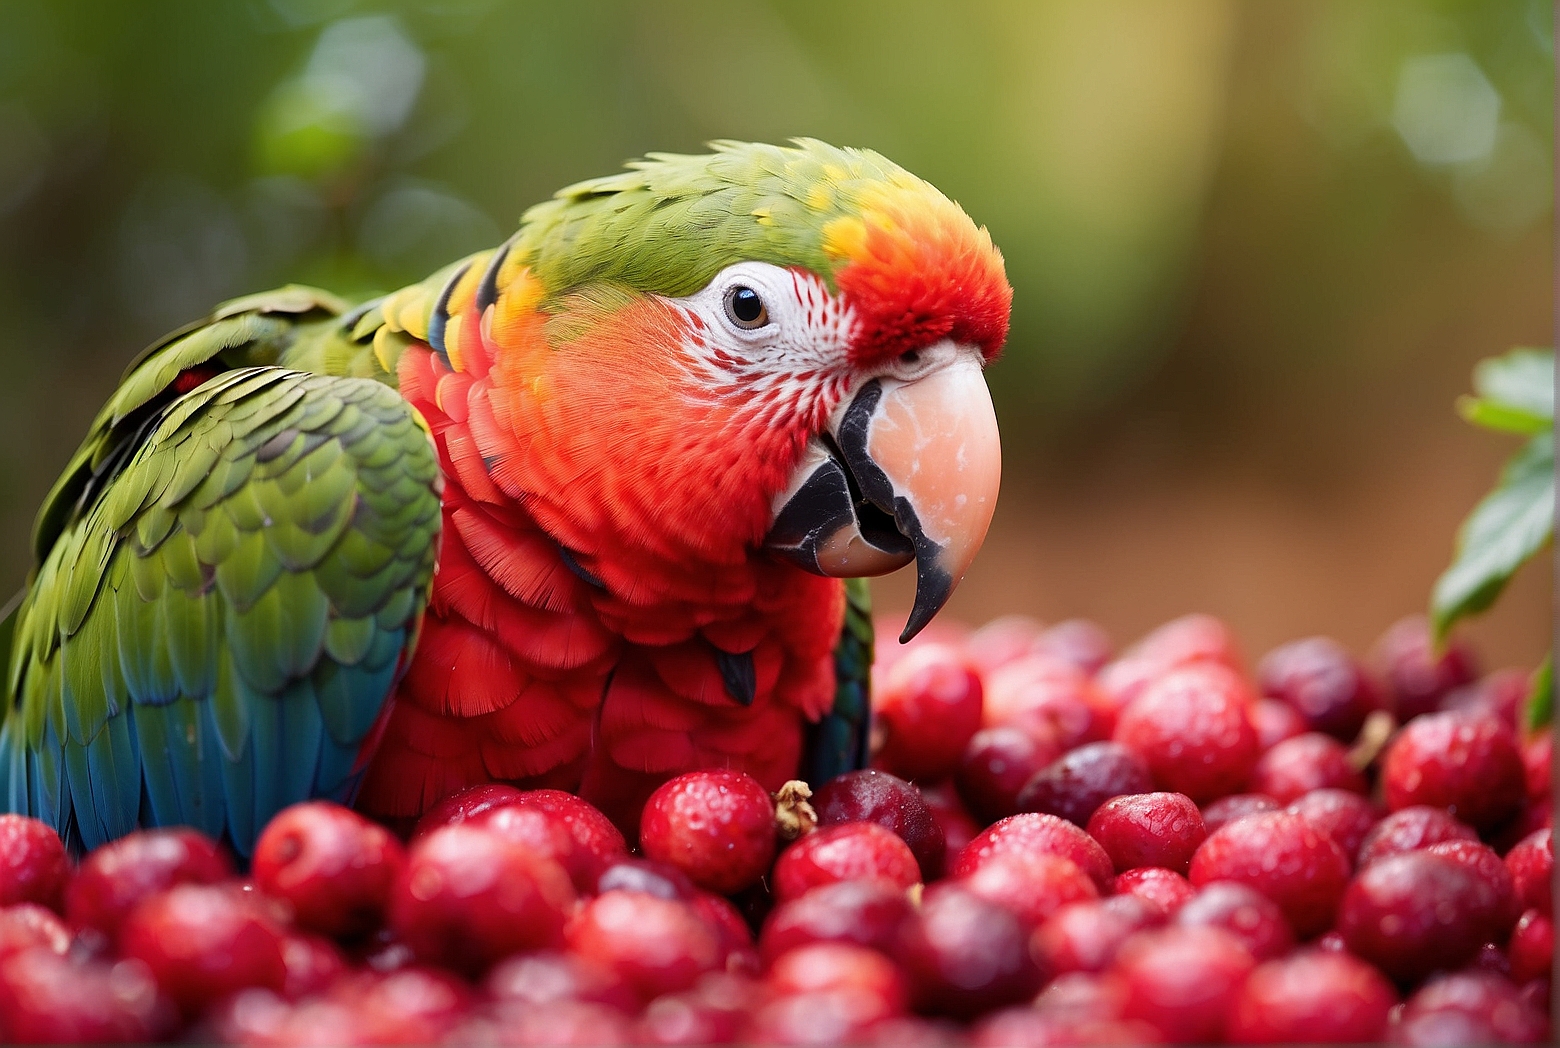 Can Parrots Eat Cranberries?